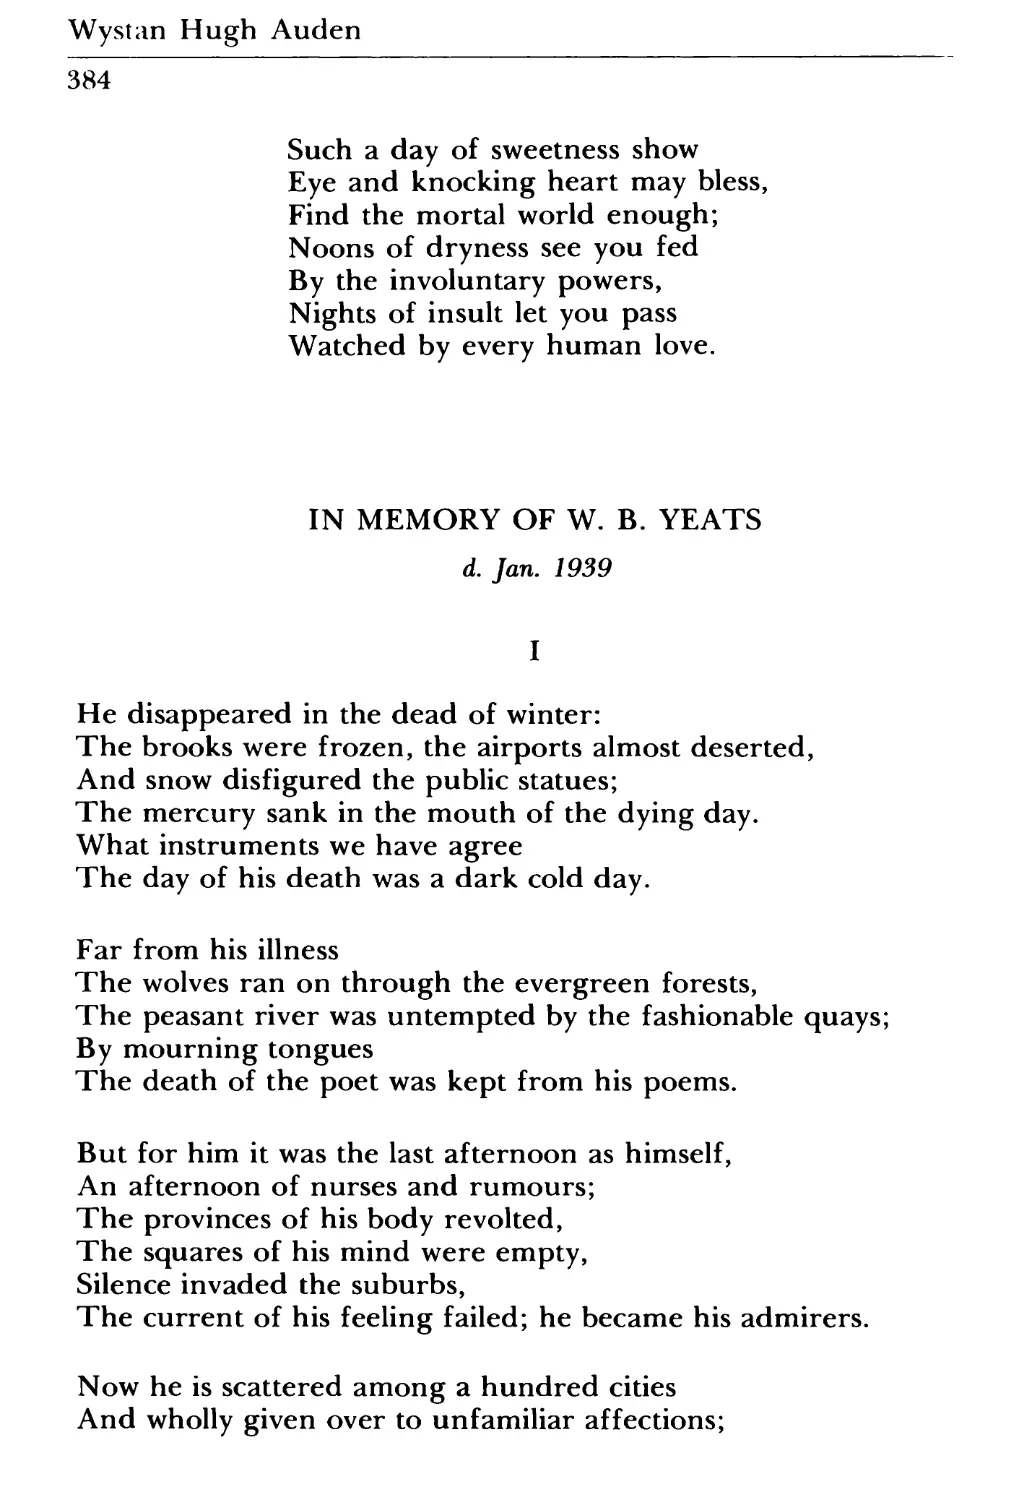 In Memory of W.B.Yeats